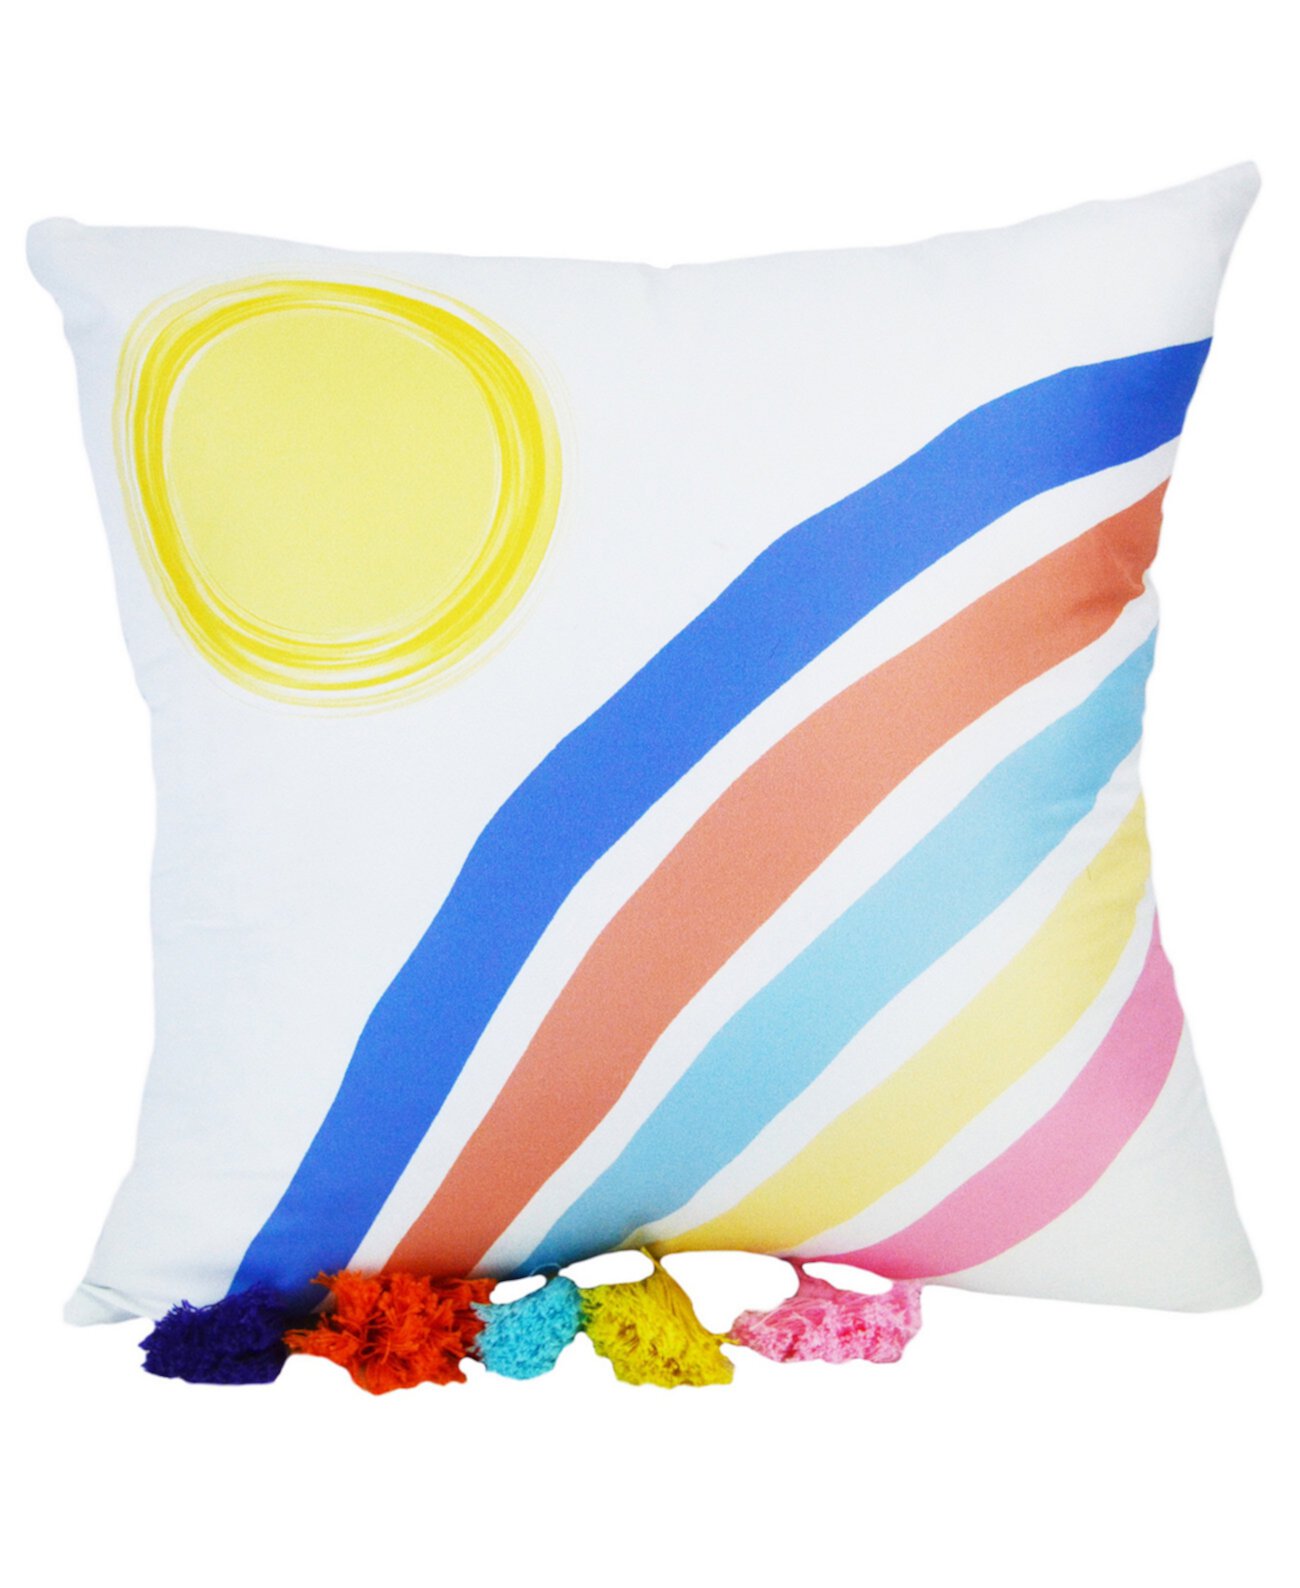 Декоративная подушка Smoothie Rainbow, 18 x 18 дюймов Donna Sharp